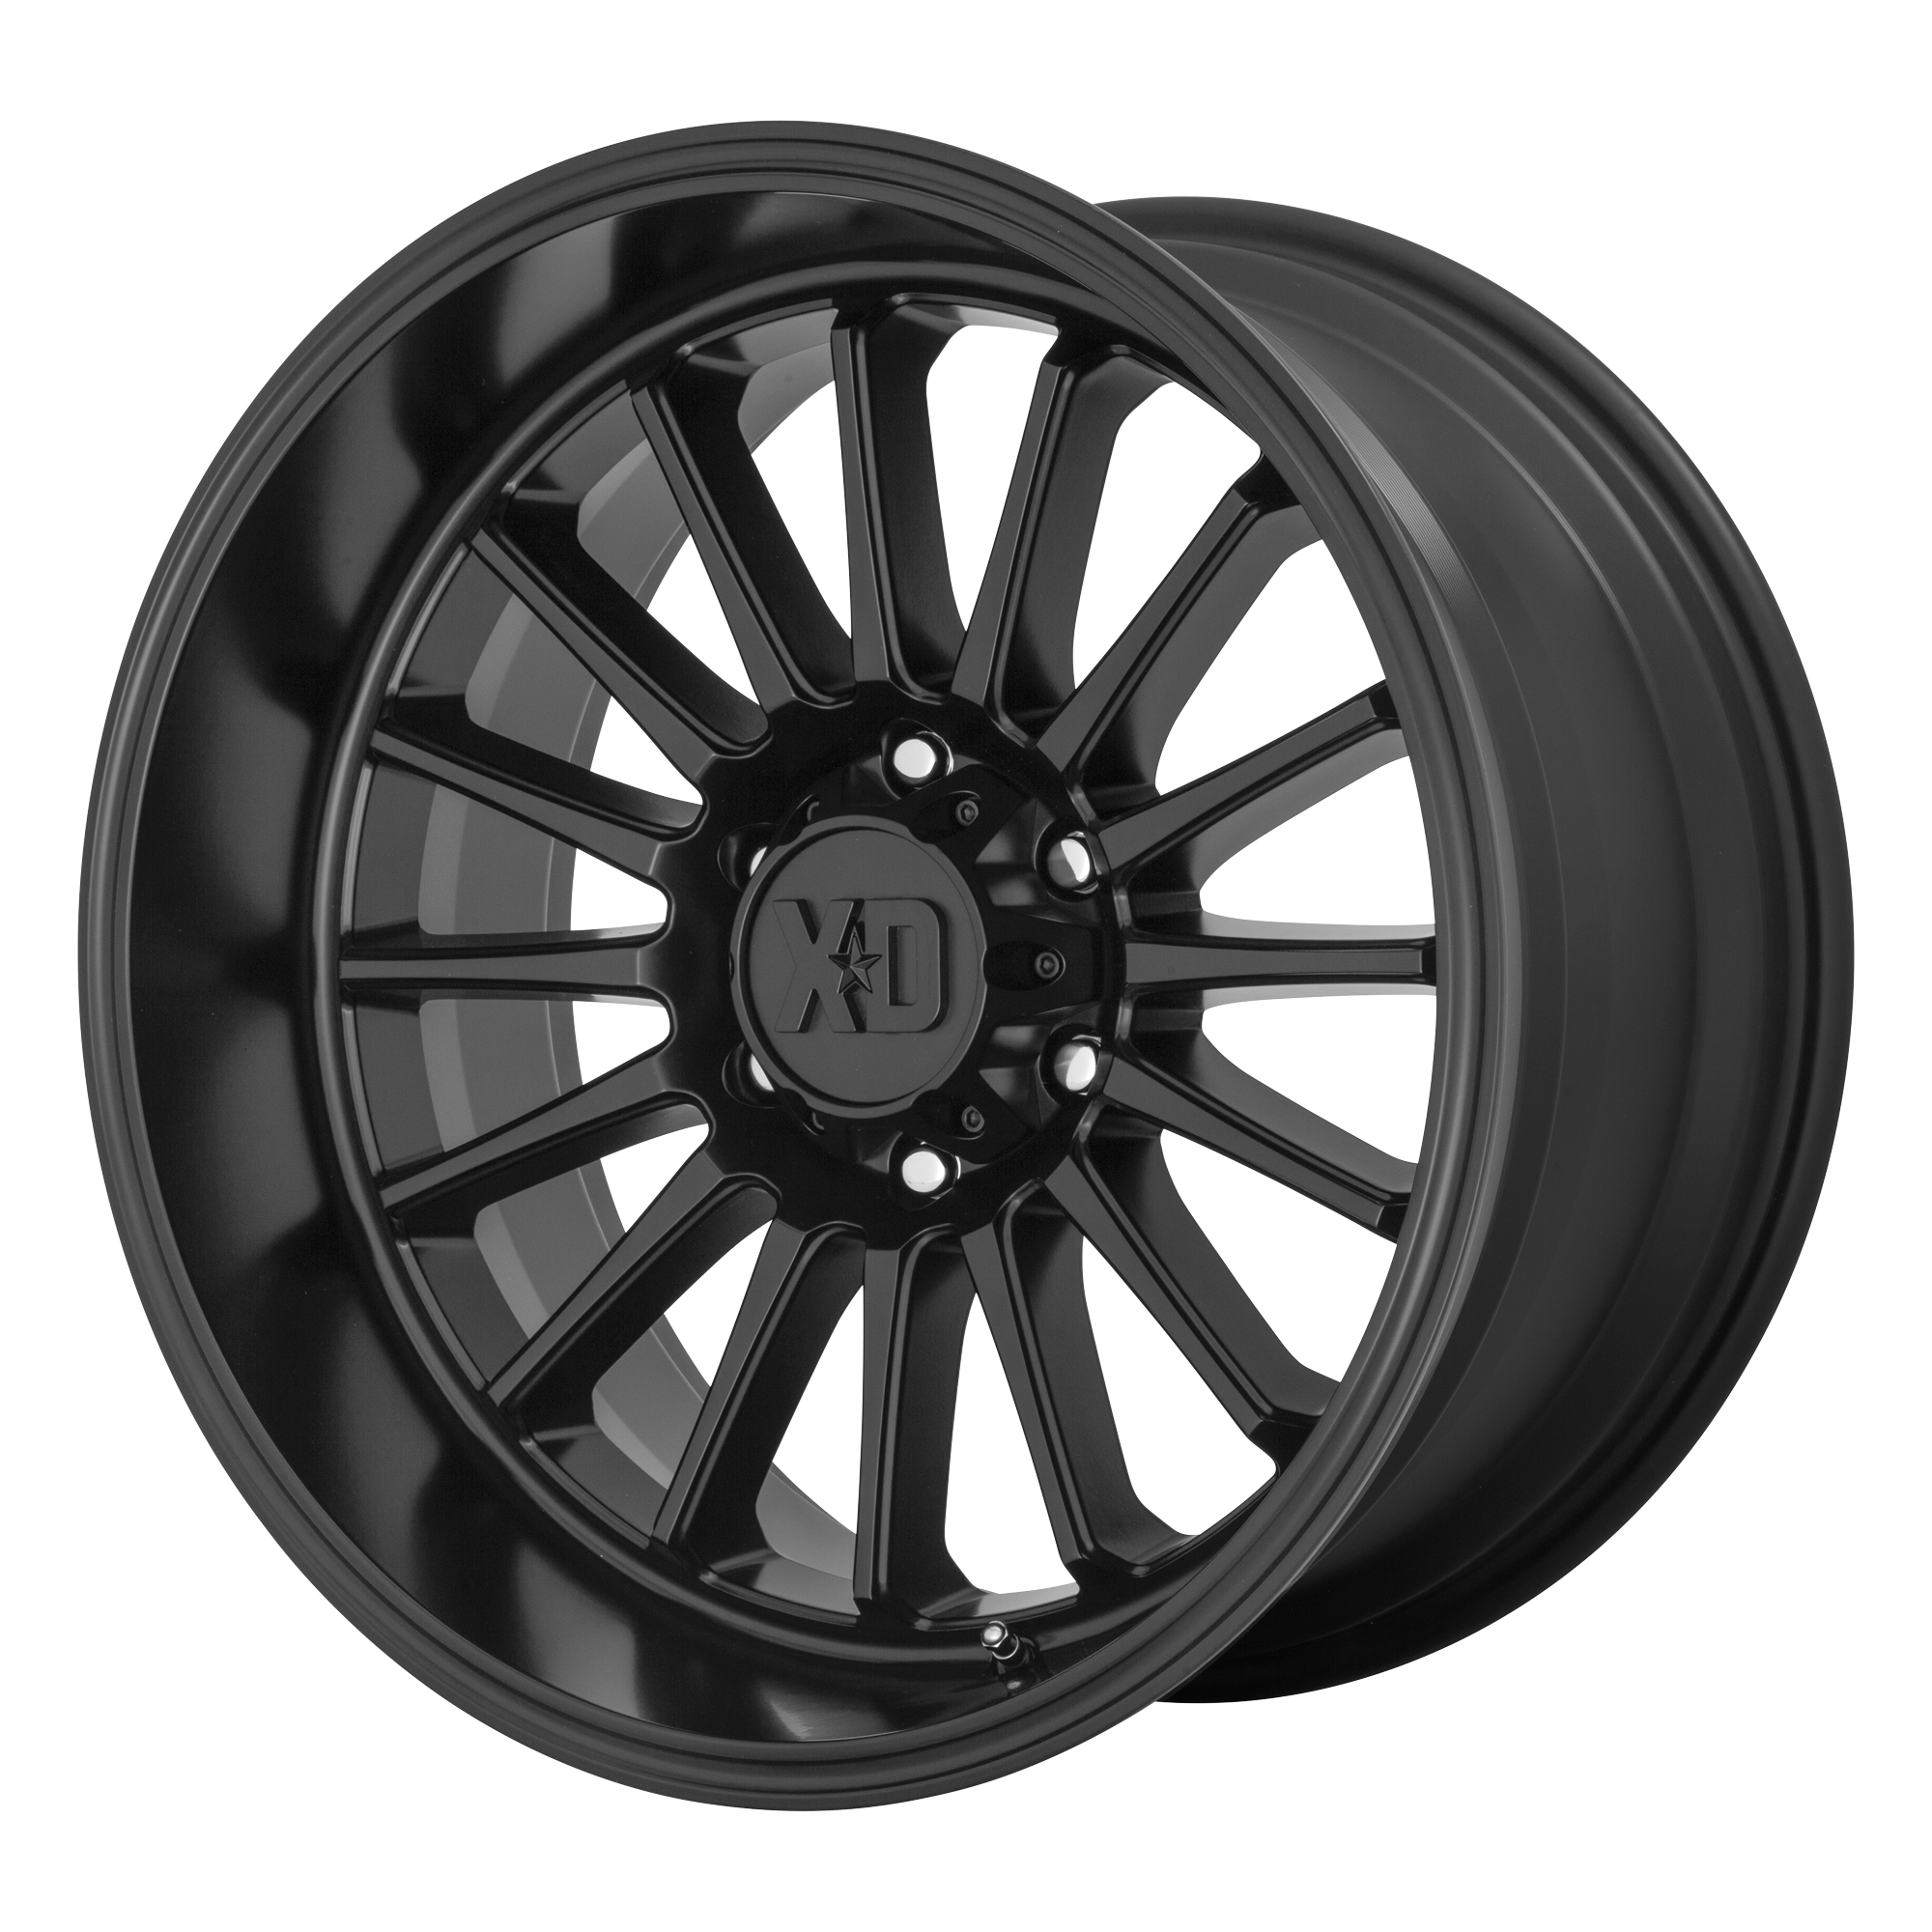 XD 22"x10" Non-Chrome Satin Black Custom Wheel ARSWCWXD85722063718N